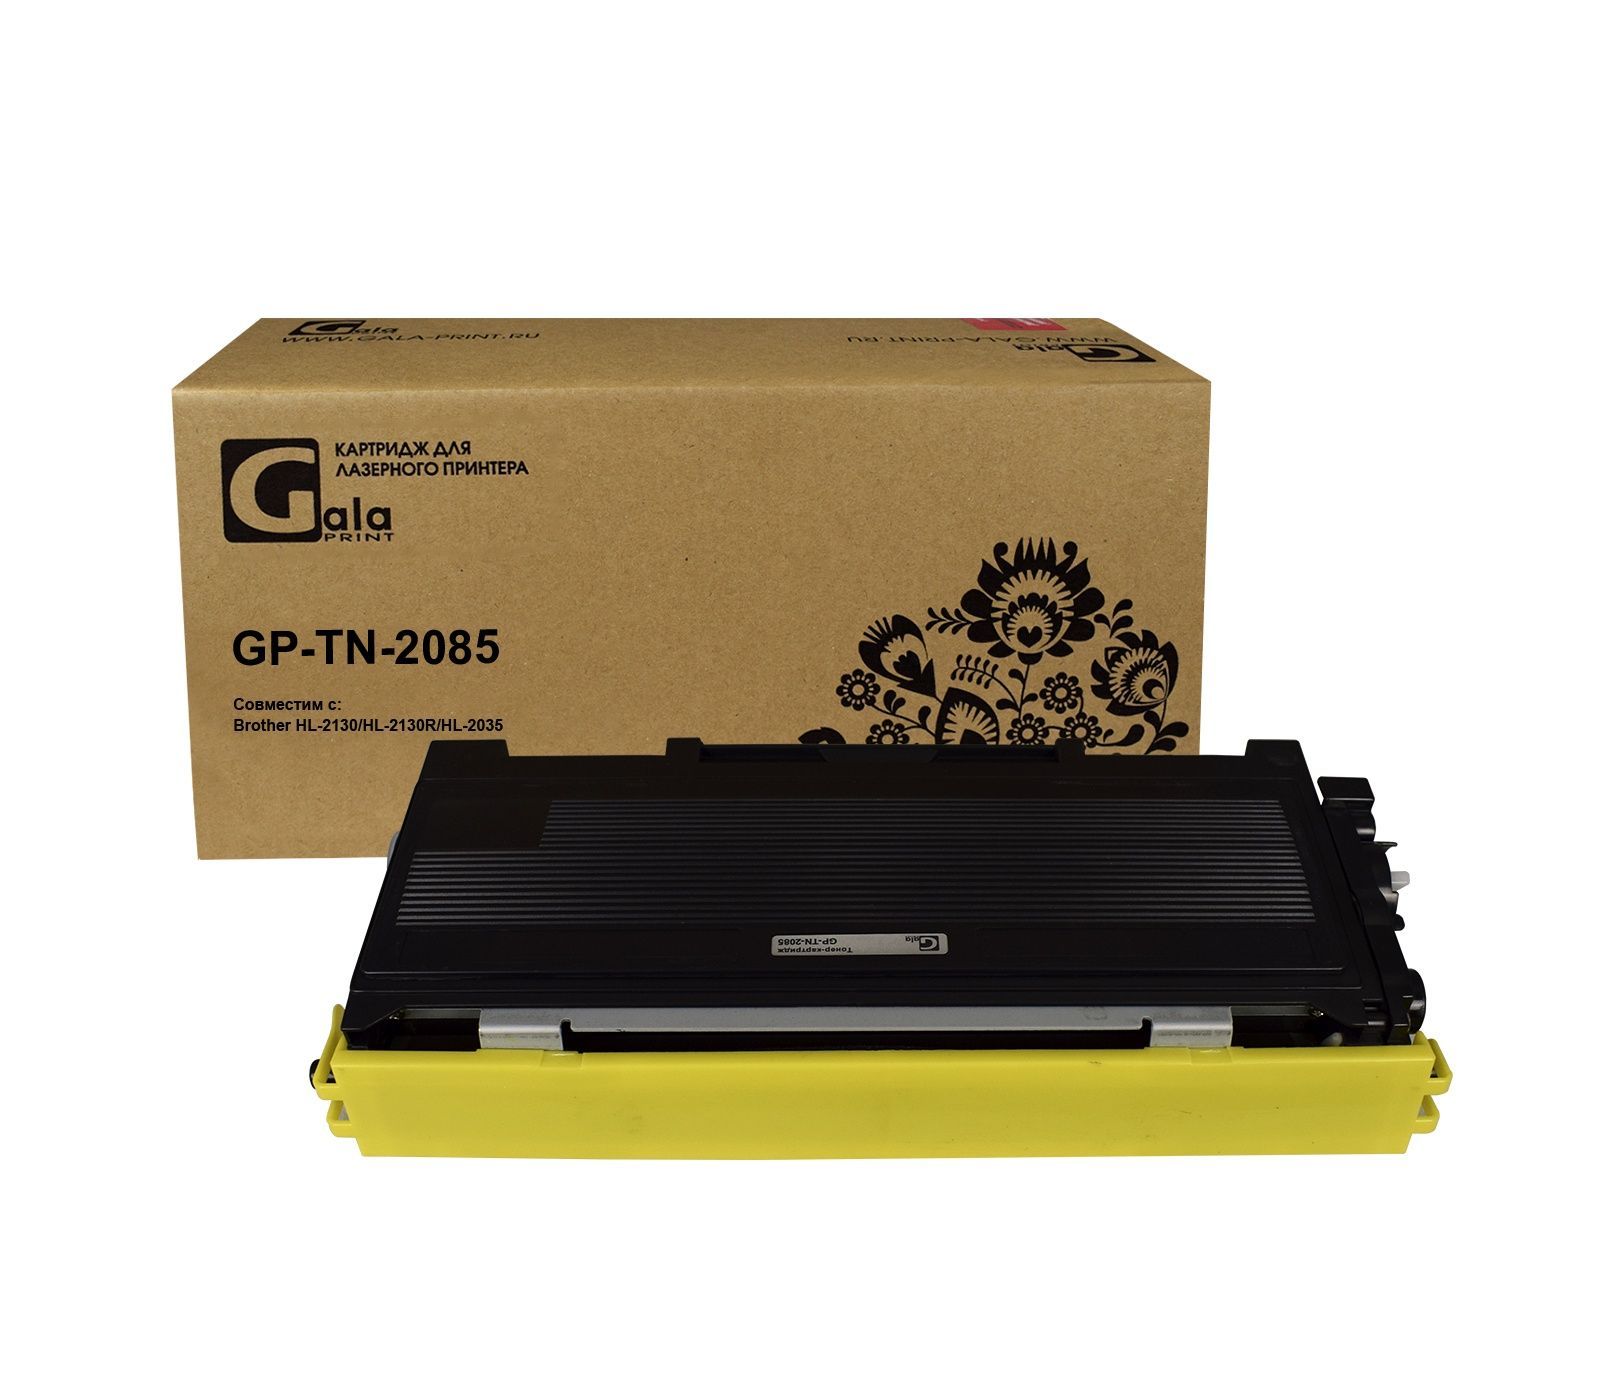 Картридж GP-TN-2085 для принтеров Brother HL-2130/HL-2130R/HL-2035 2500 копий GalaPrint